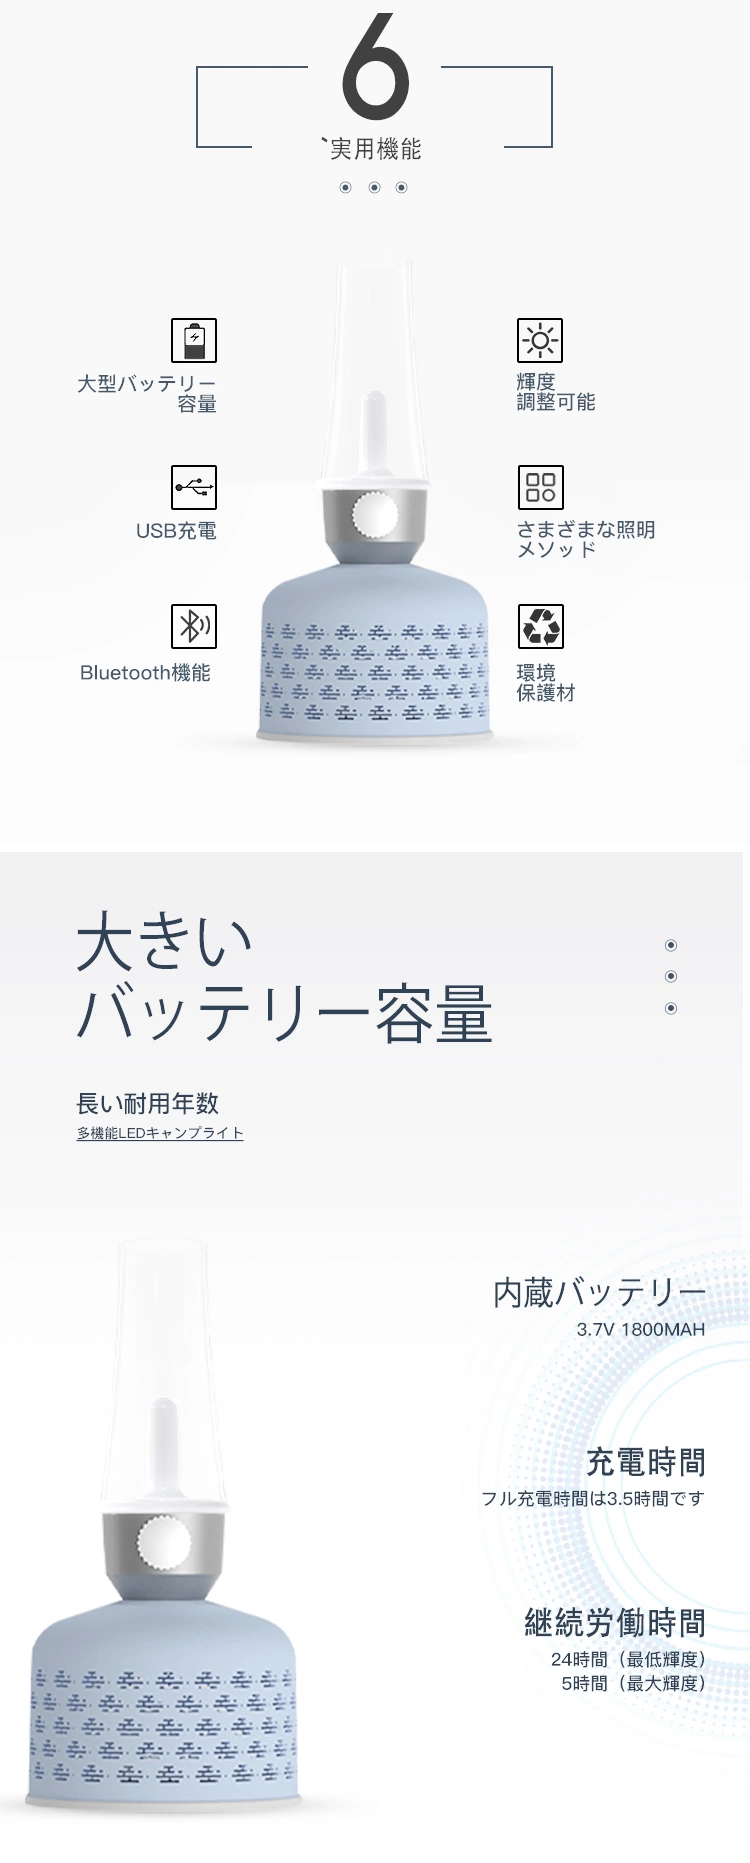 Goldmore2 Japan Fancy Portable Custom LED Camping Lantern Light Bluetooth